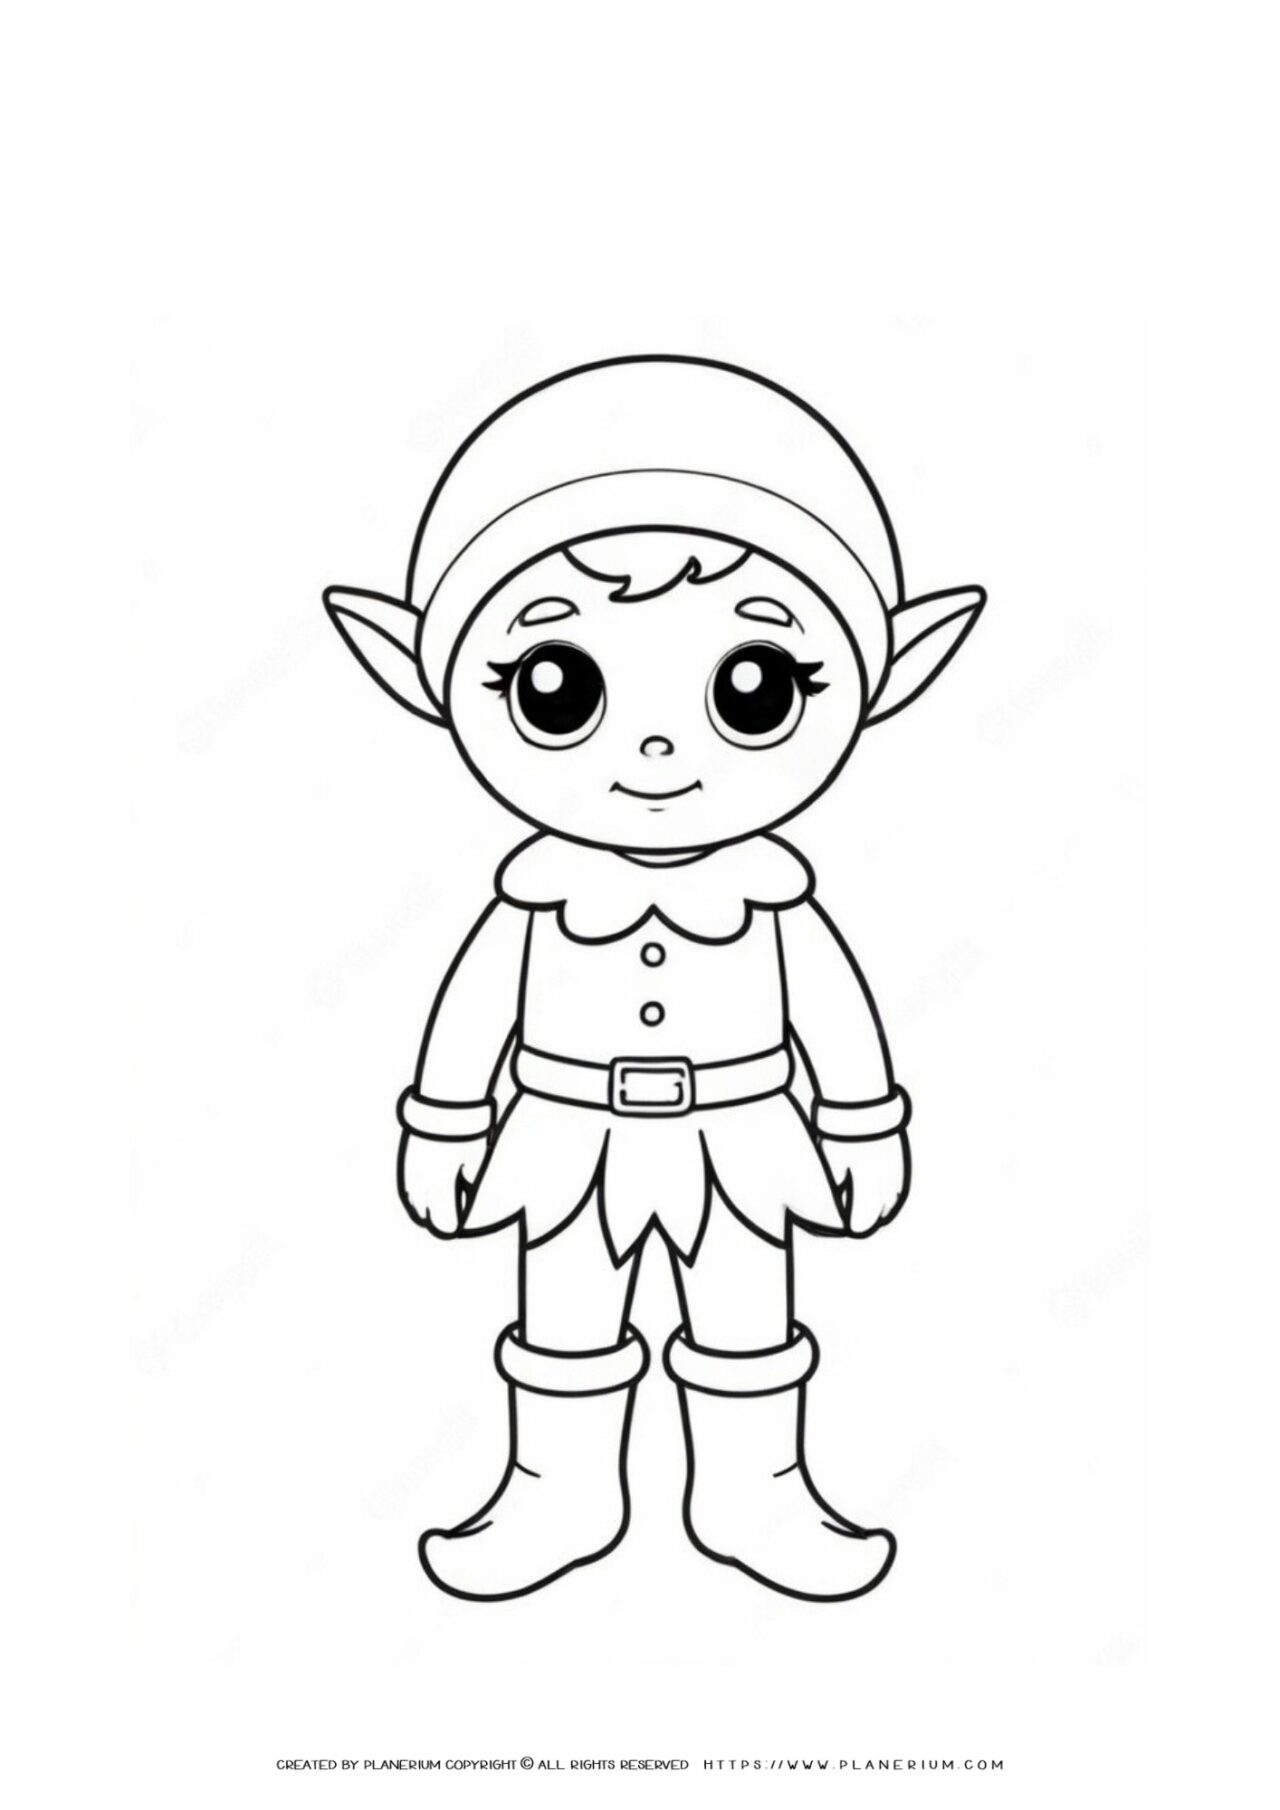 Cartoon elf coloring page illustration.